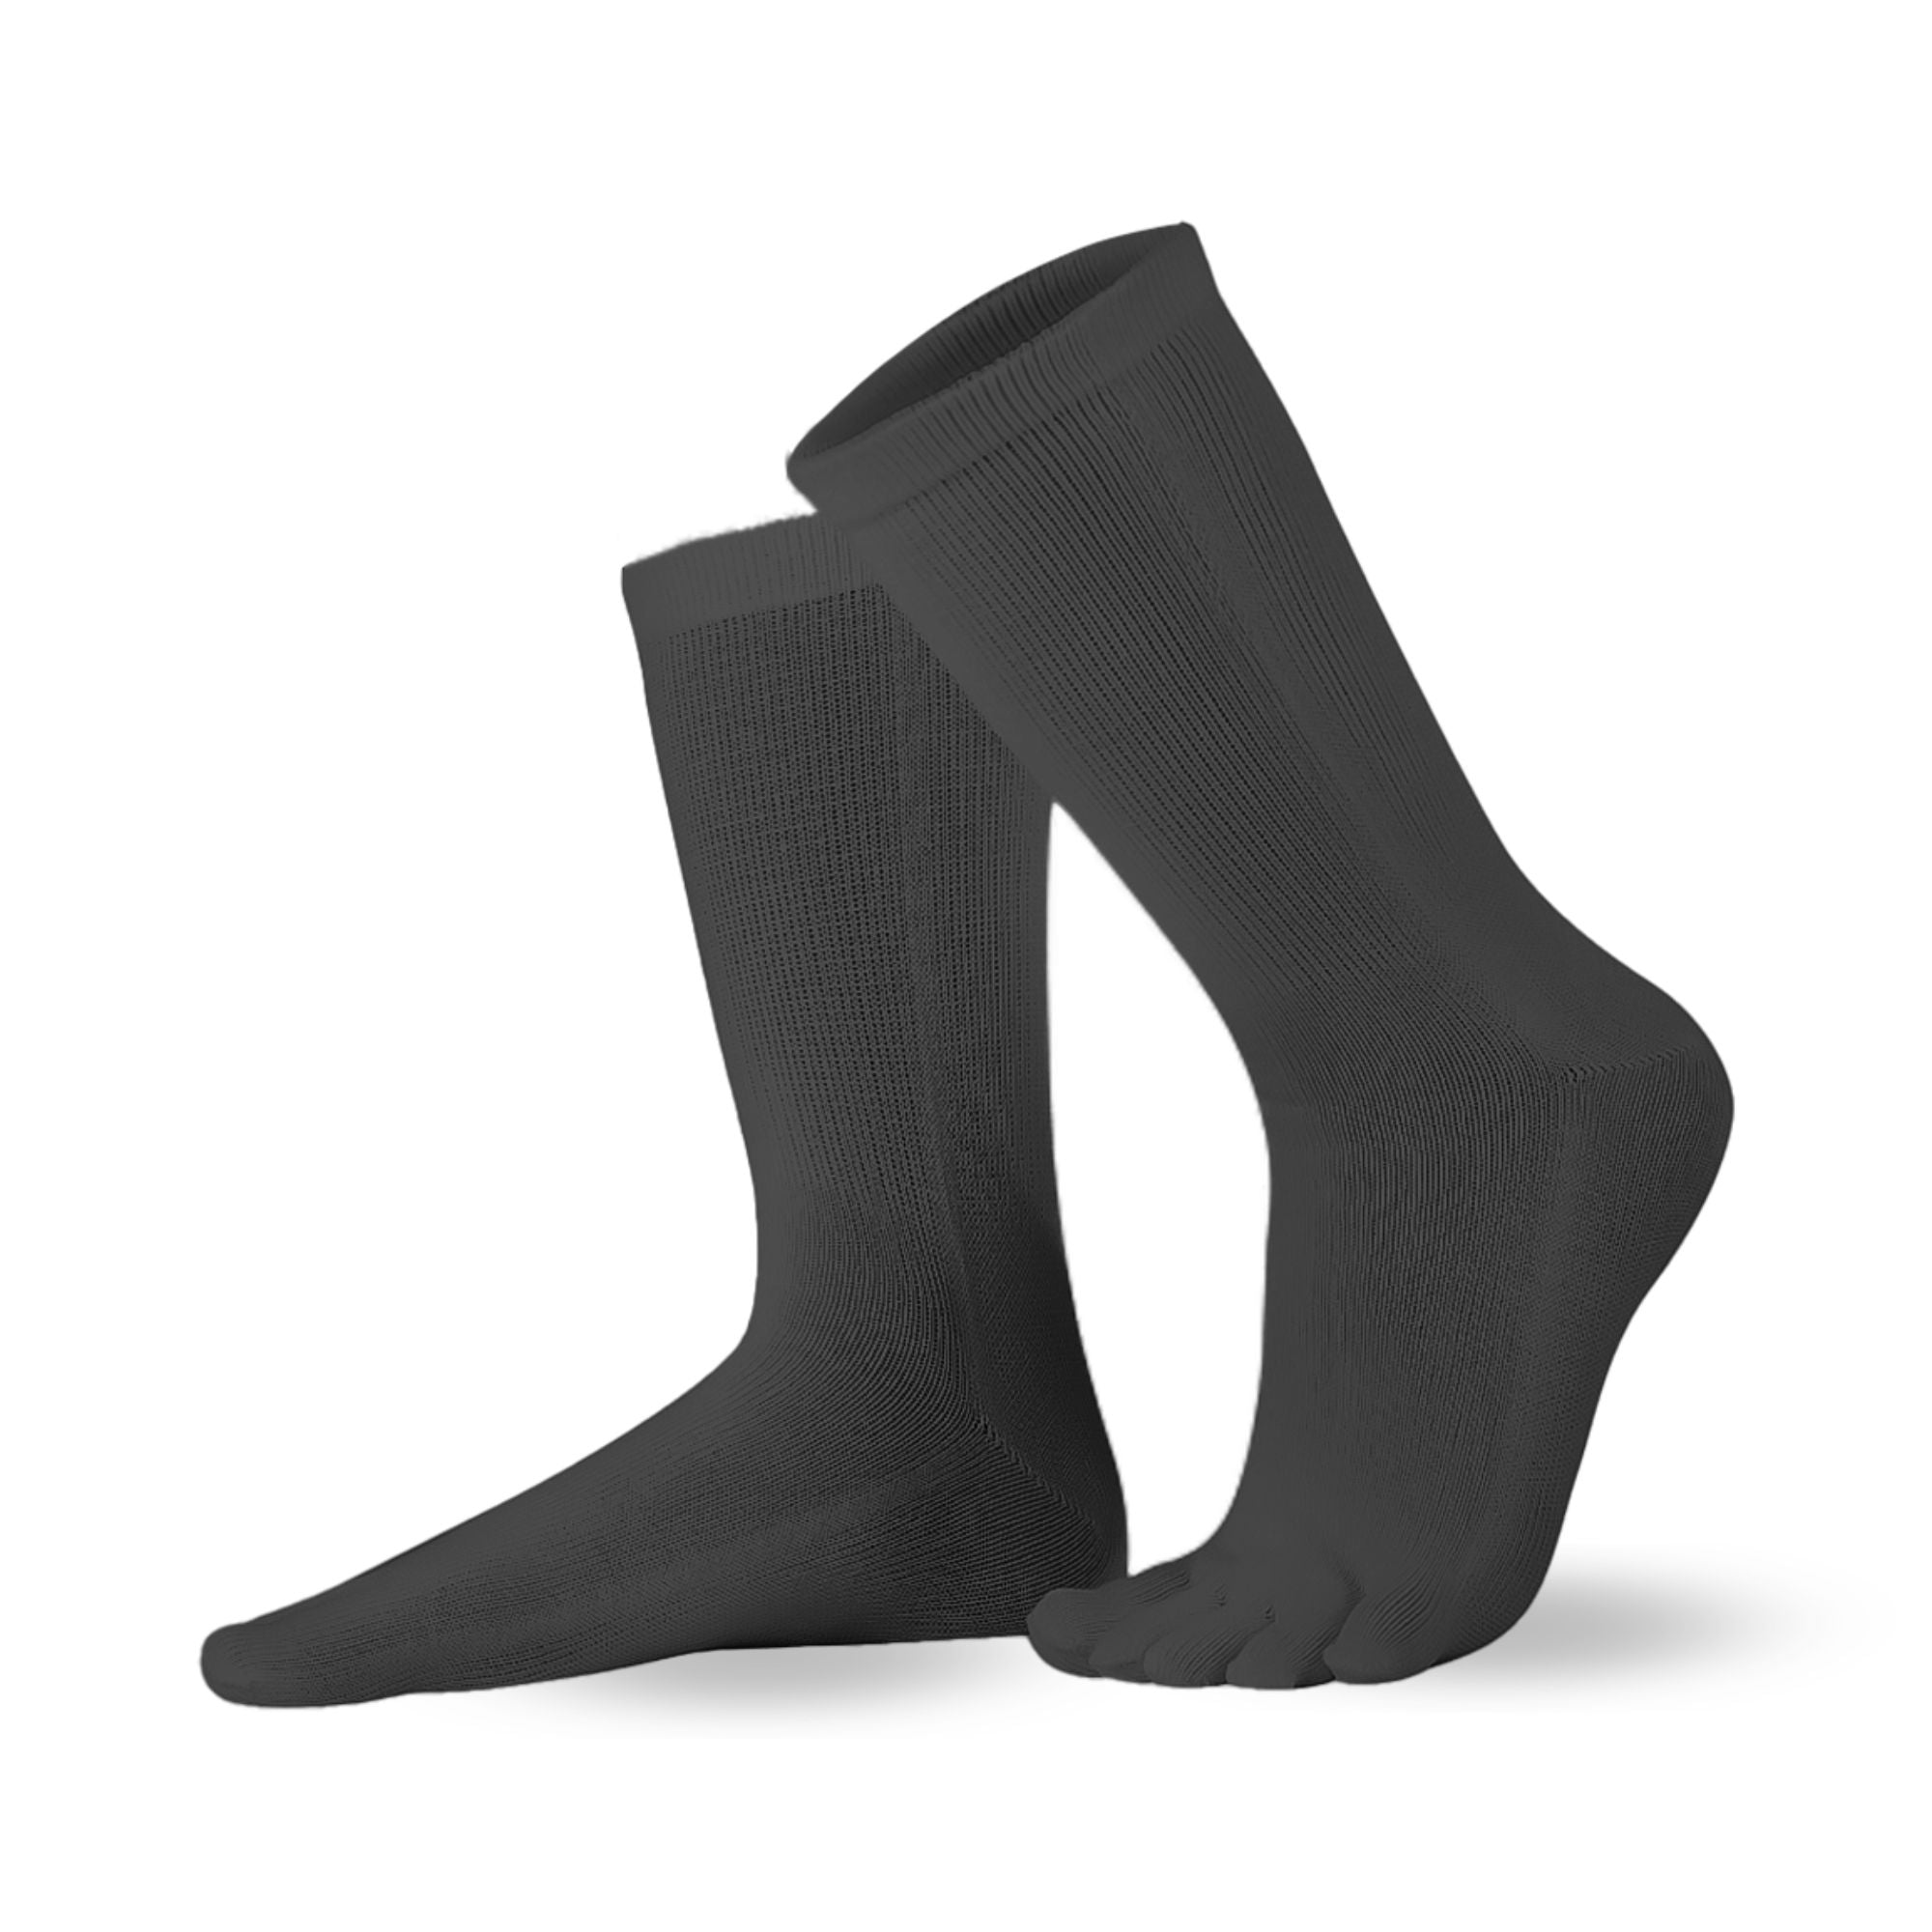 Knitido Essentials calcetines de algodón para los dedos - Knitido®.